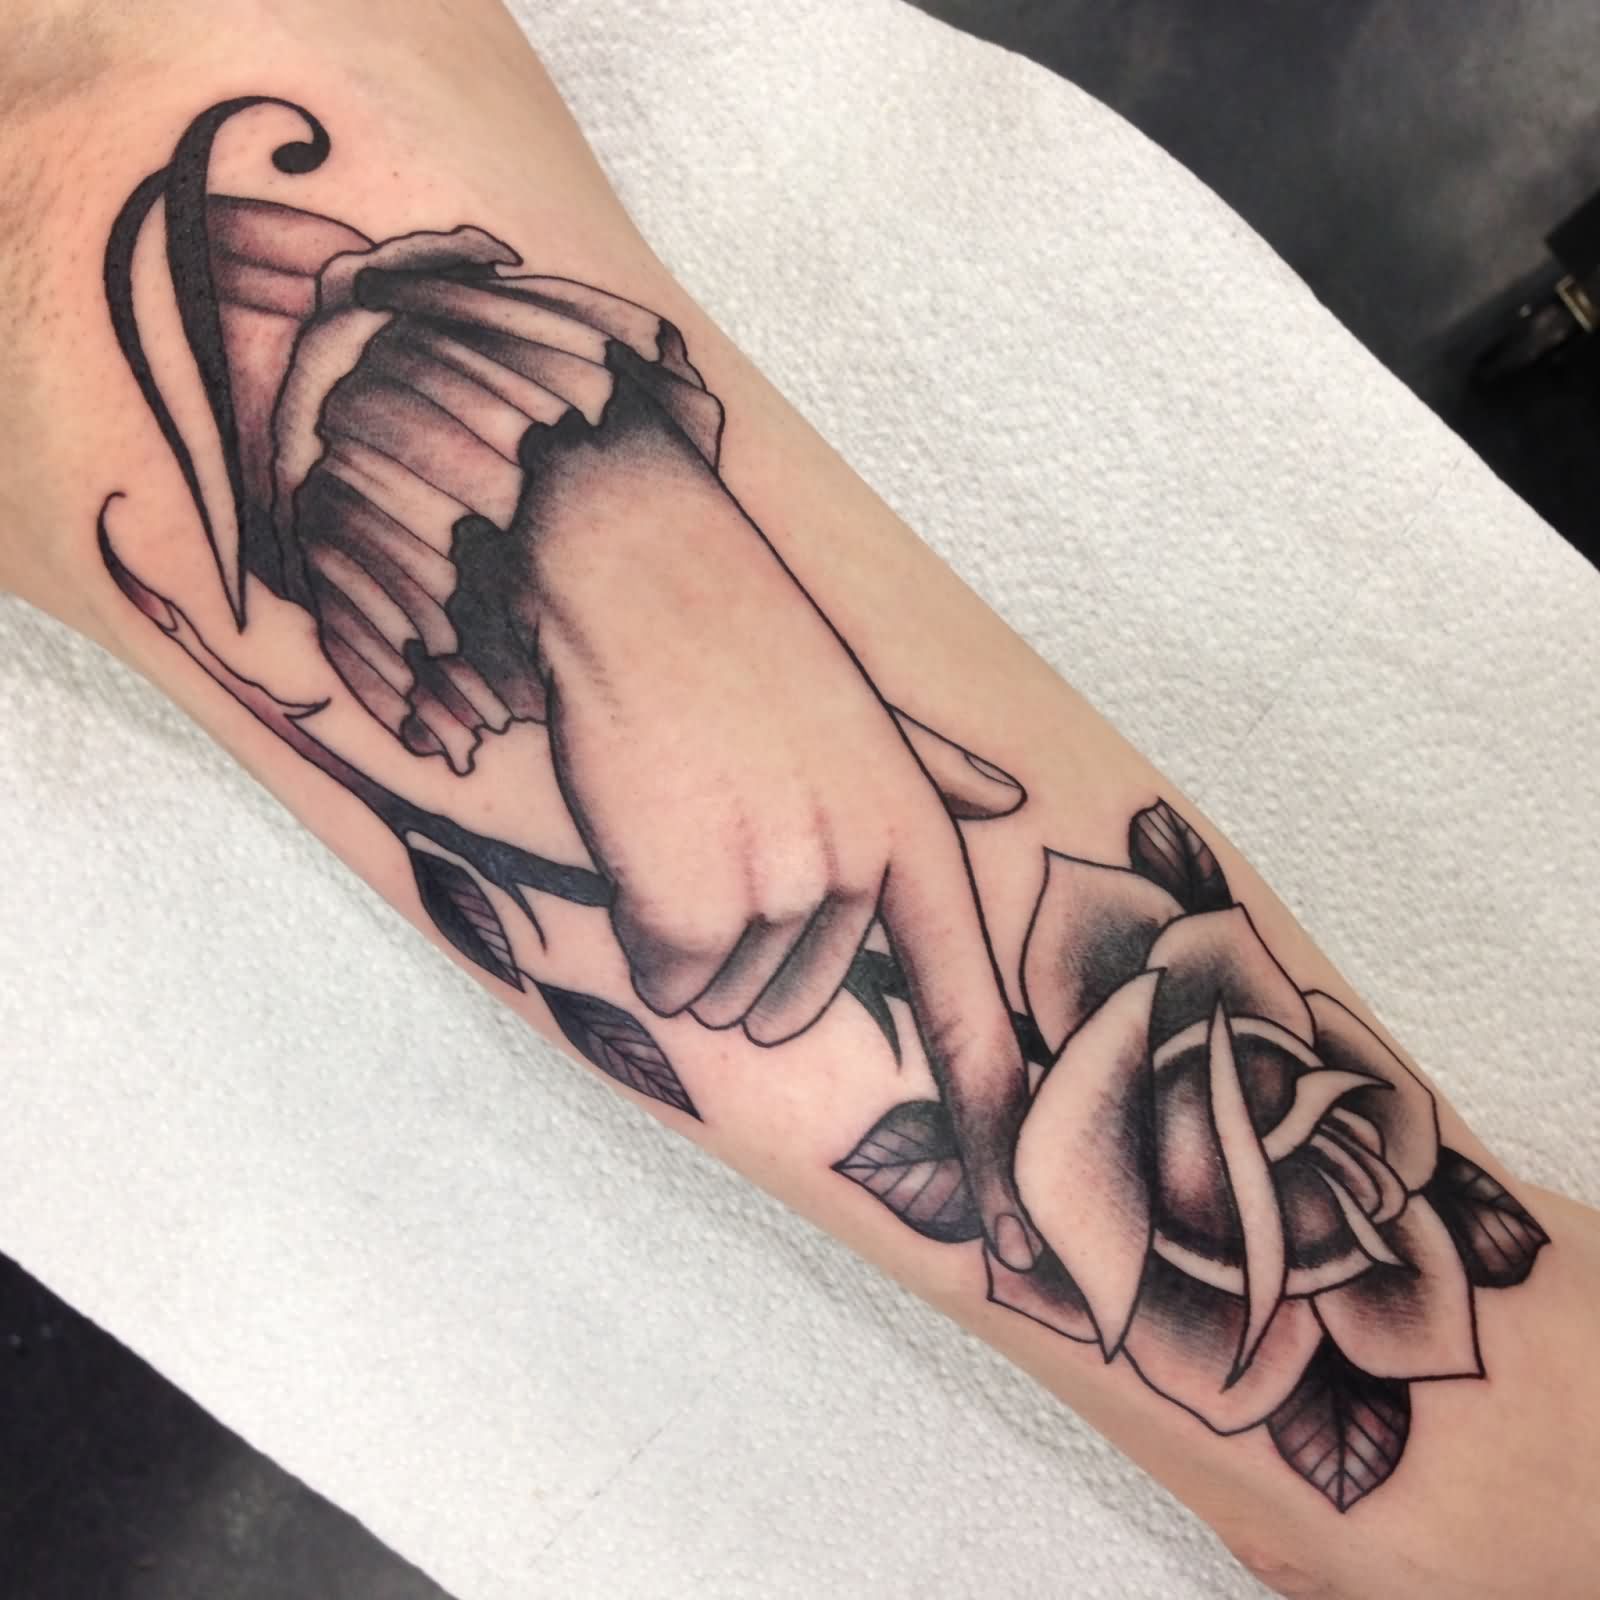 Black Ink Rose Tattoo On Forearm By Kohen Meyers